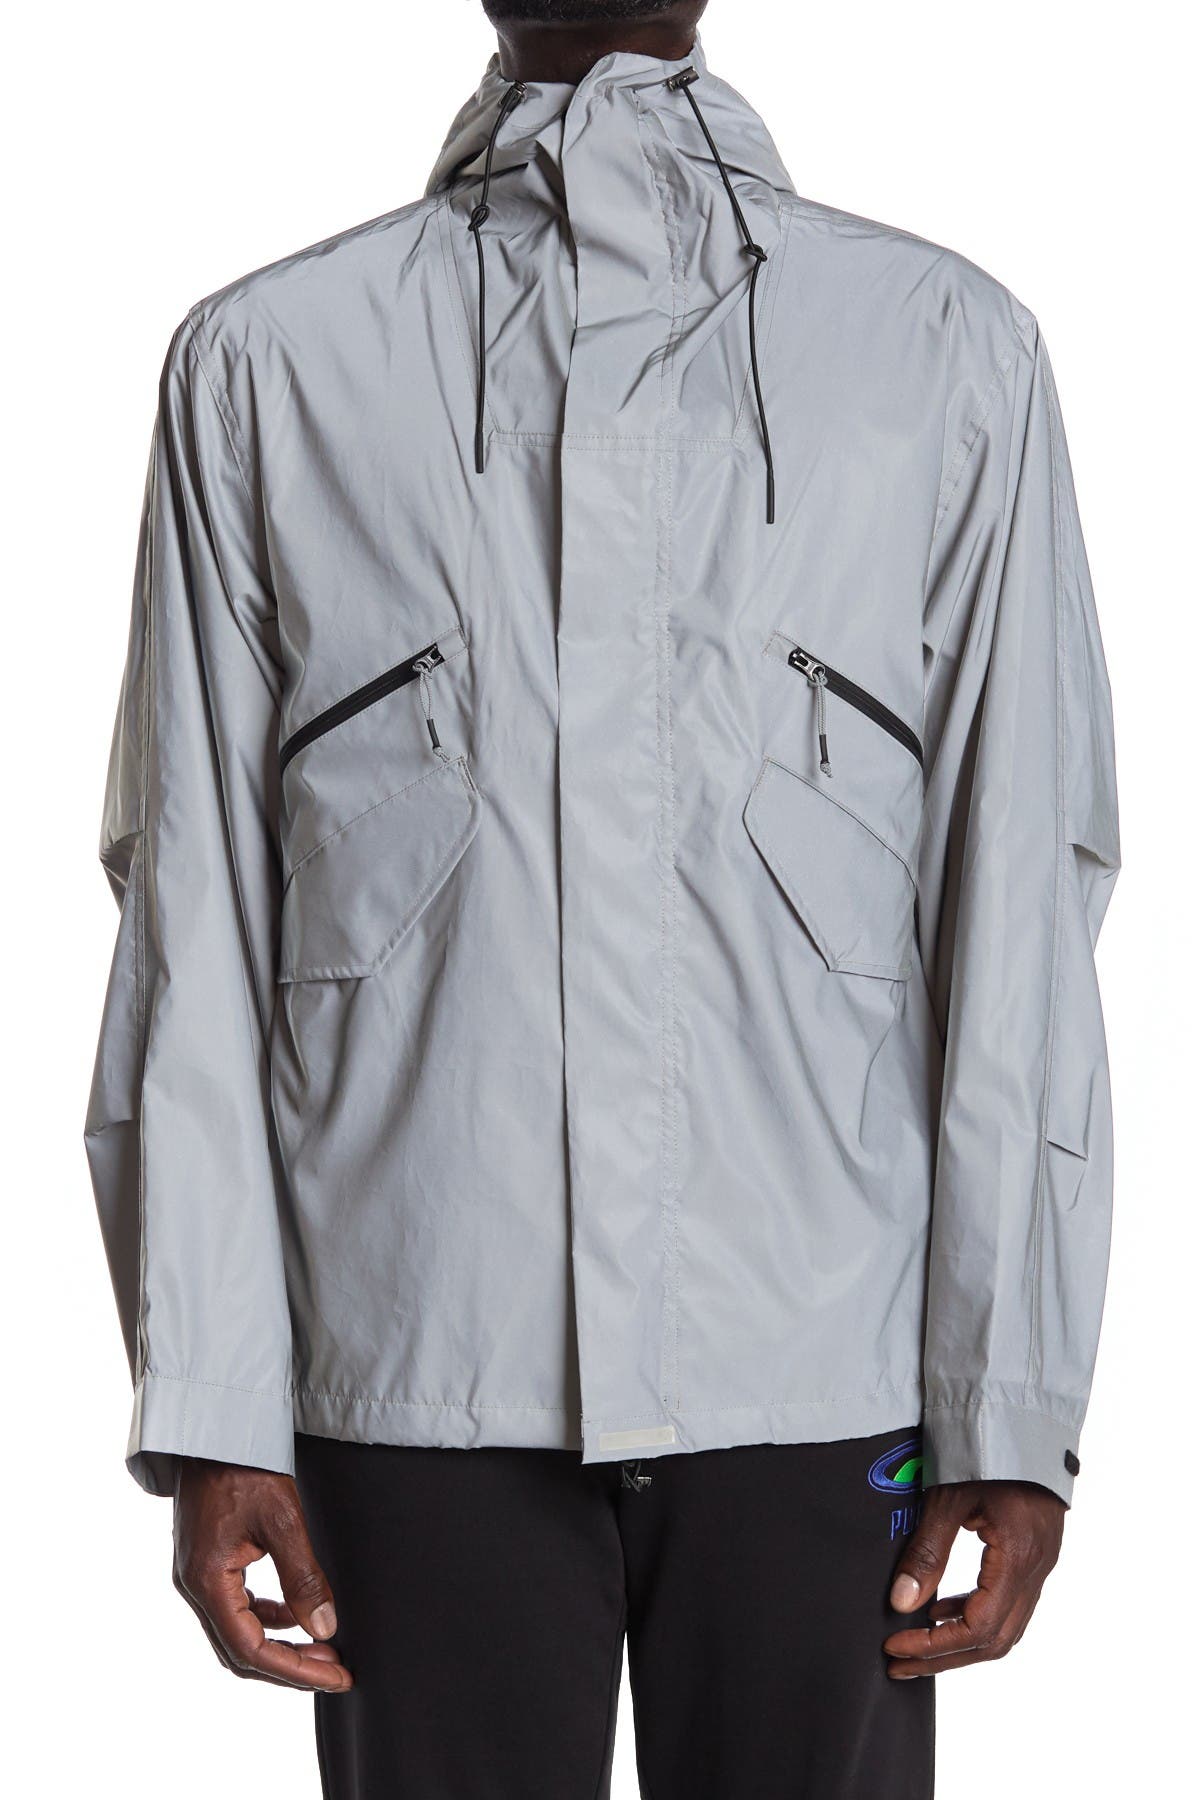 puma reflective jacket